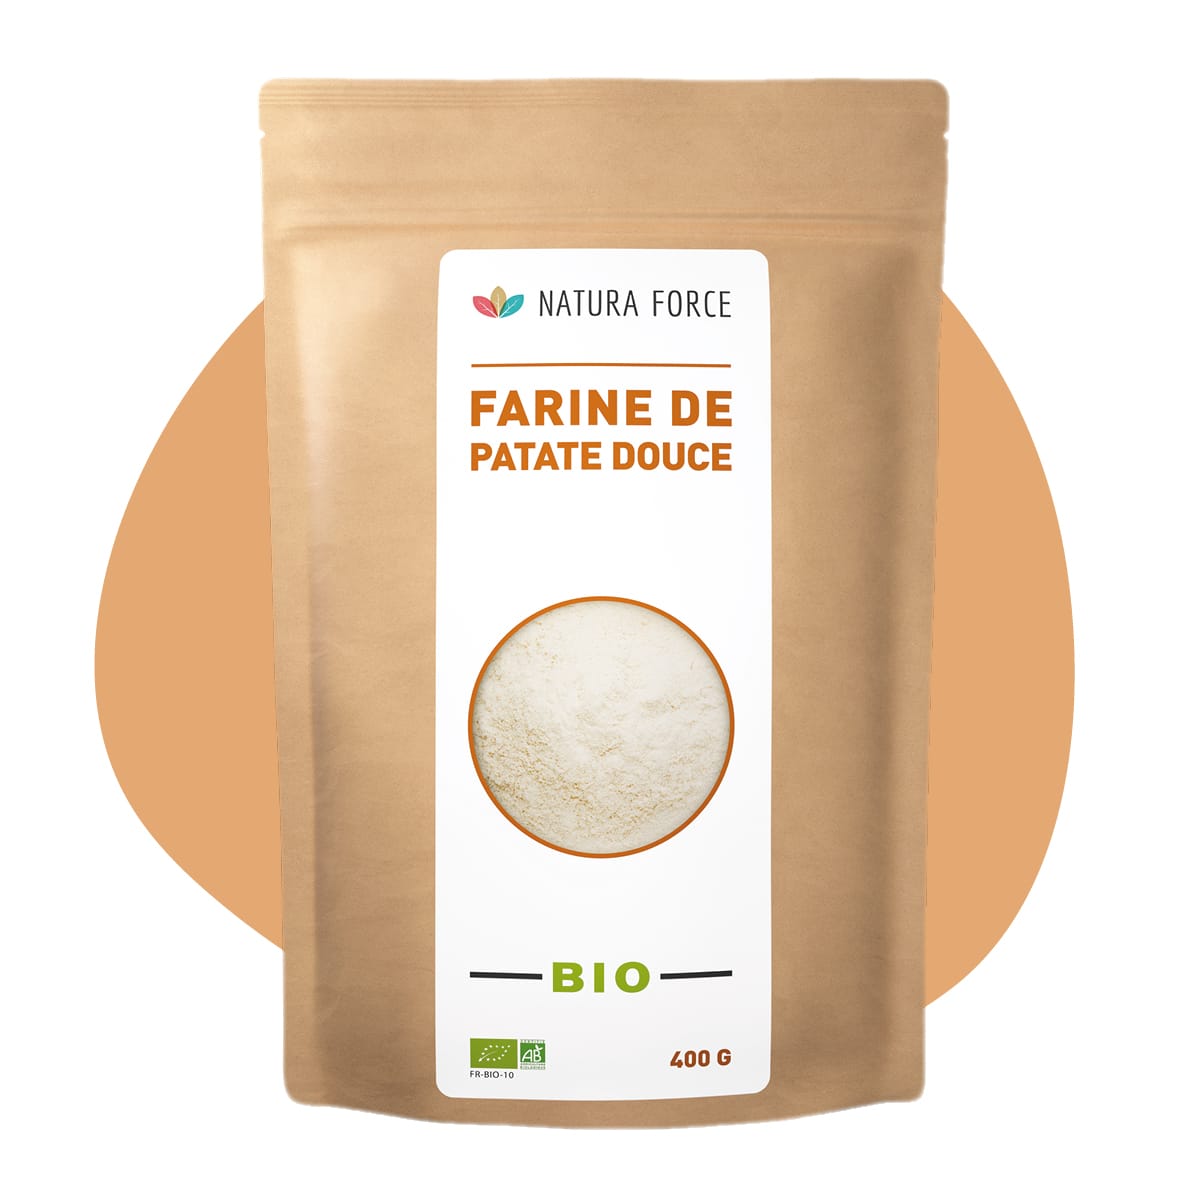 packshot-farine-de-patate-douce-bio-natura-force